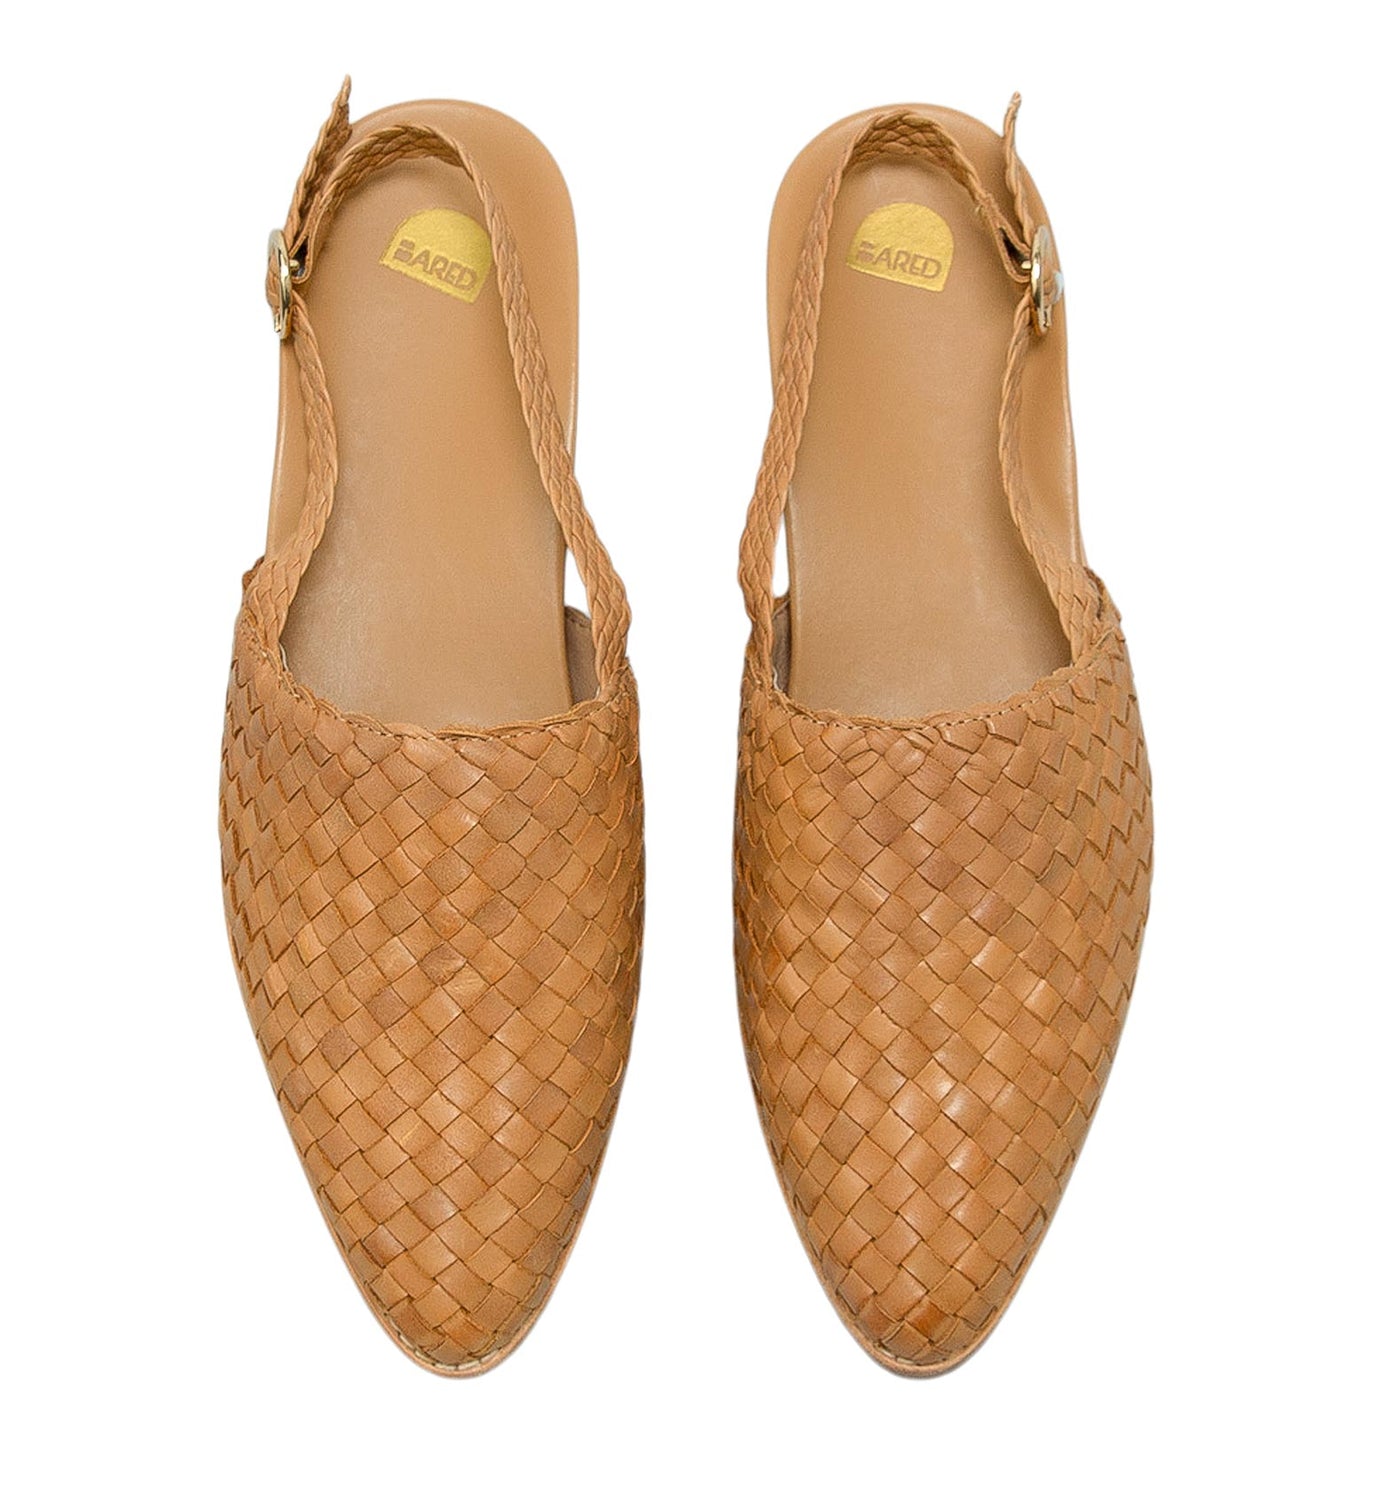 Heron Light Tan Leather Flat Sandals | Bared Footwear